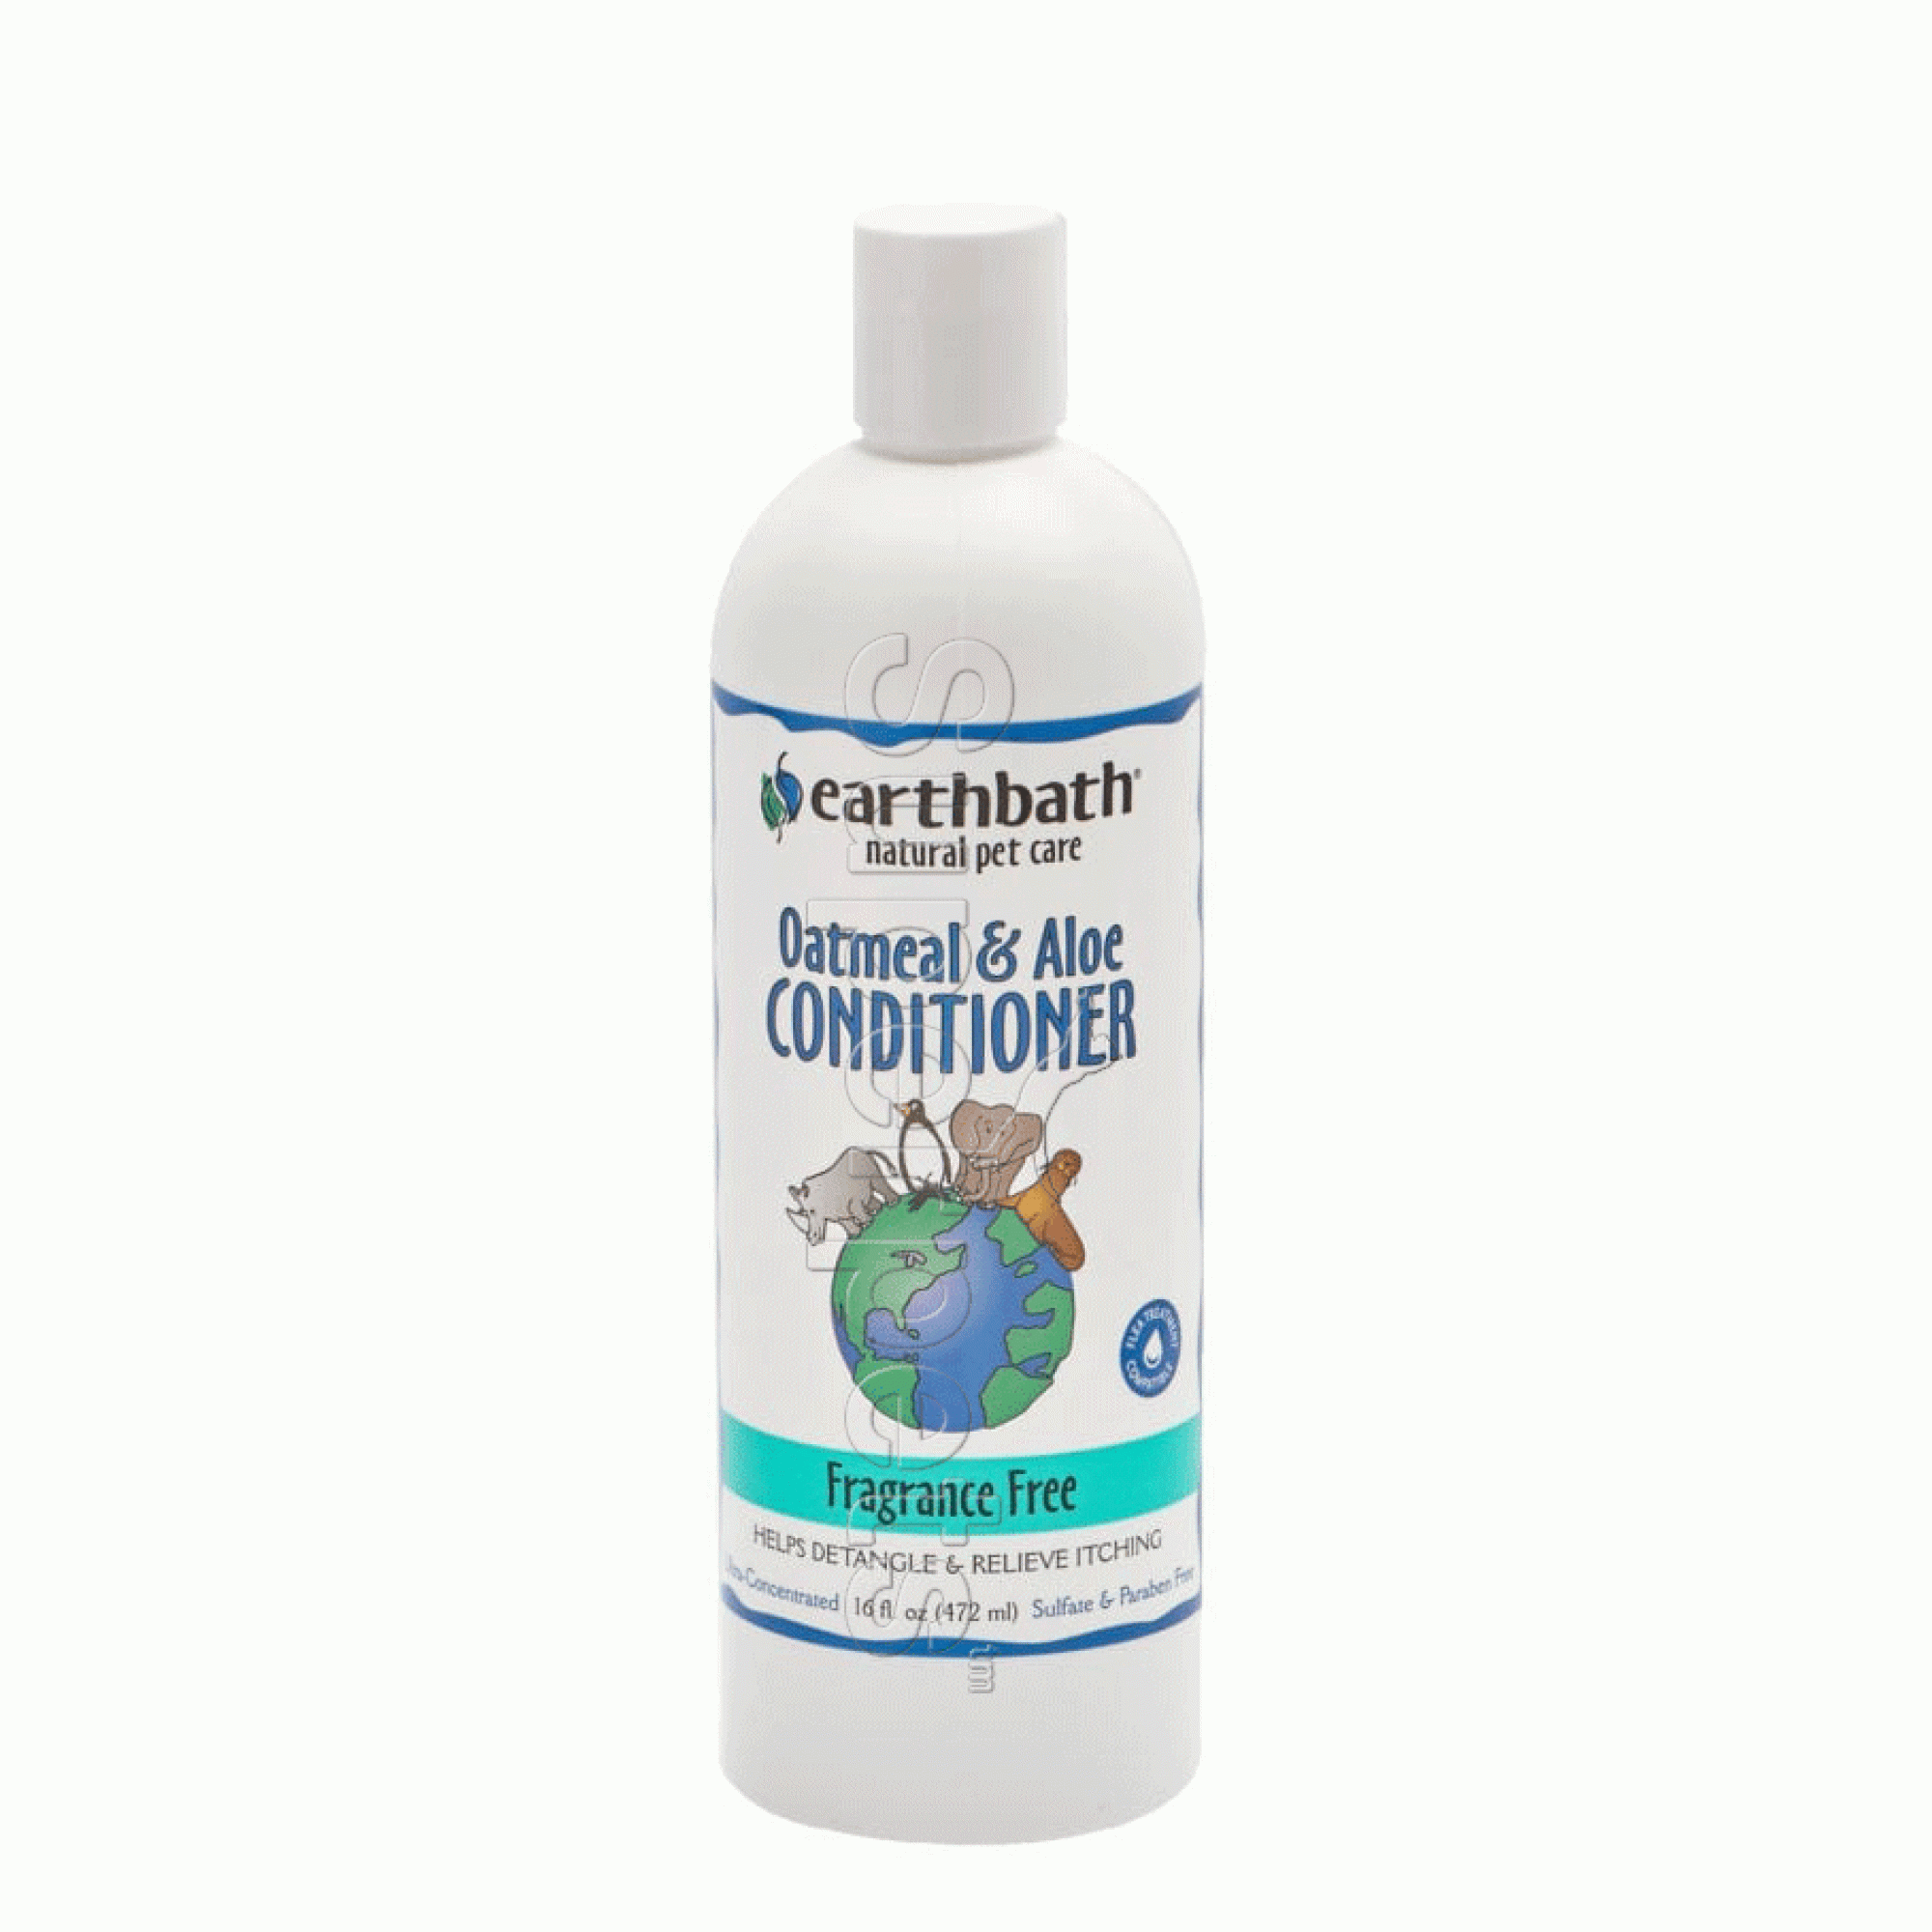 Earthbath EB014 Oatmeal & Aloe Conditioner Fragrance Free 16oz (472ml)